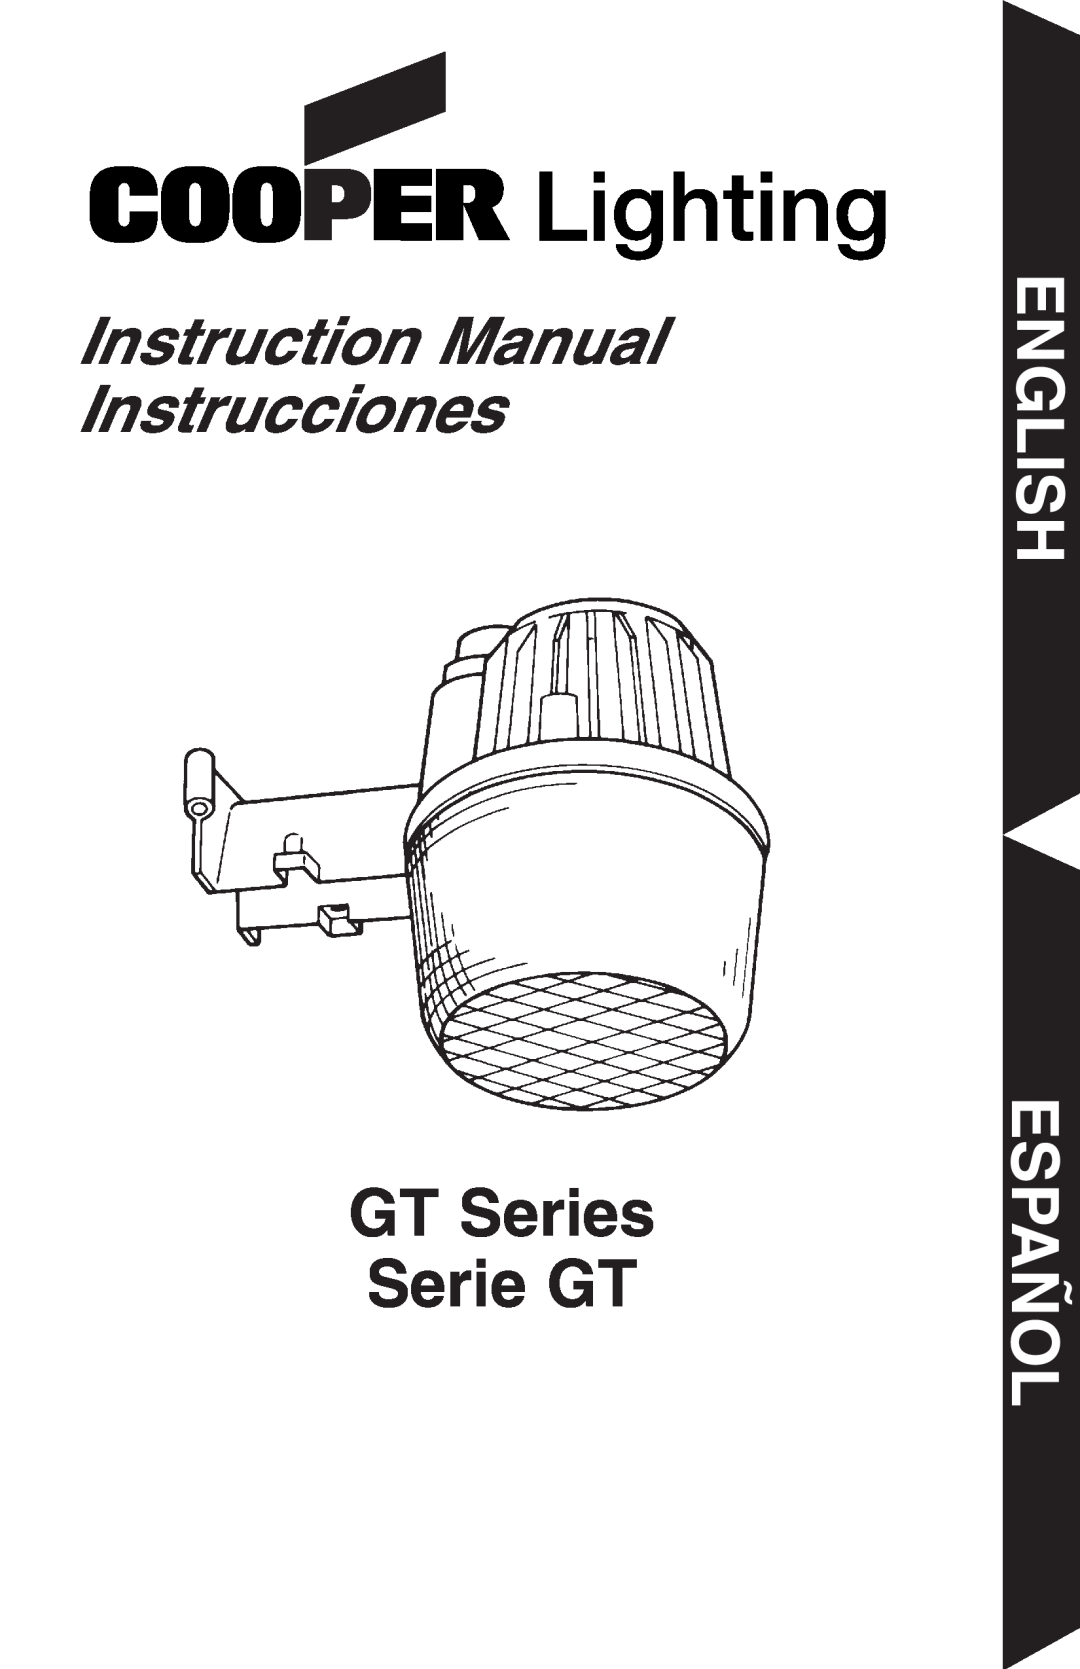 Cooper Lighting instruction manual English Español, GT Series Serie GT 